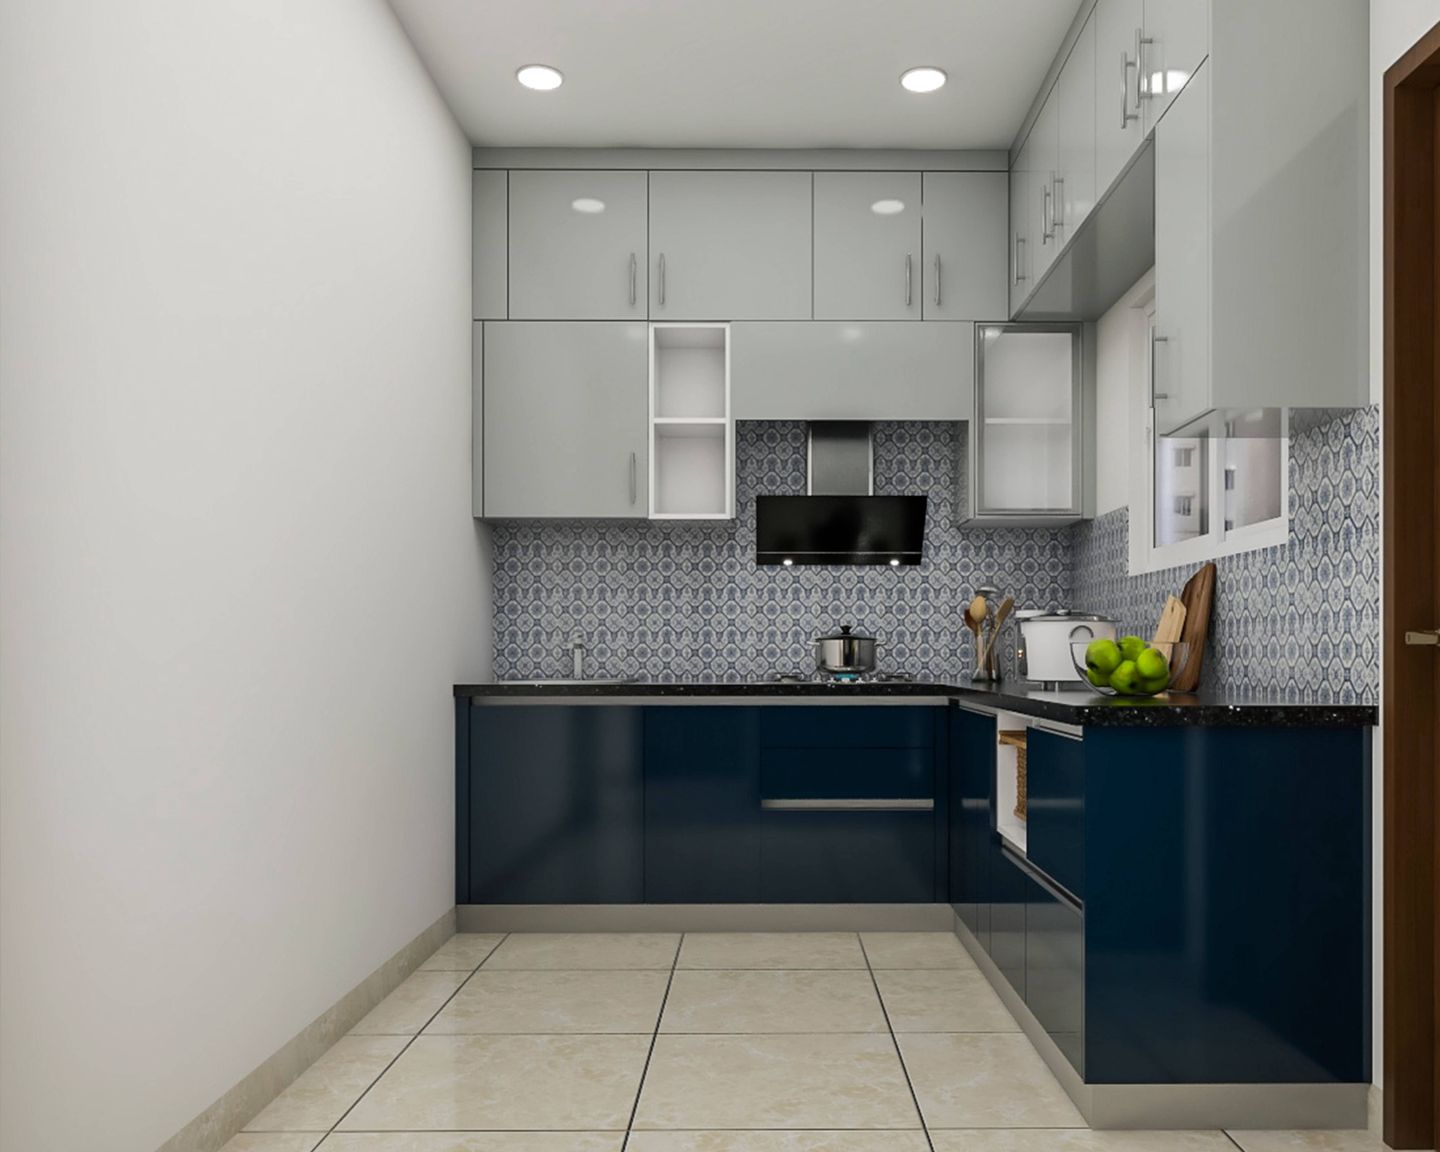 L-Shaped Kitchen With A Granite Countertop - Livspace